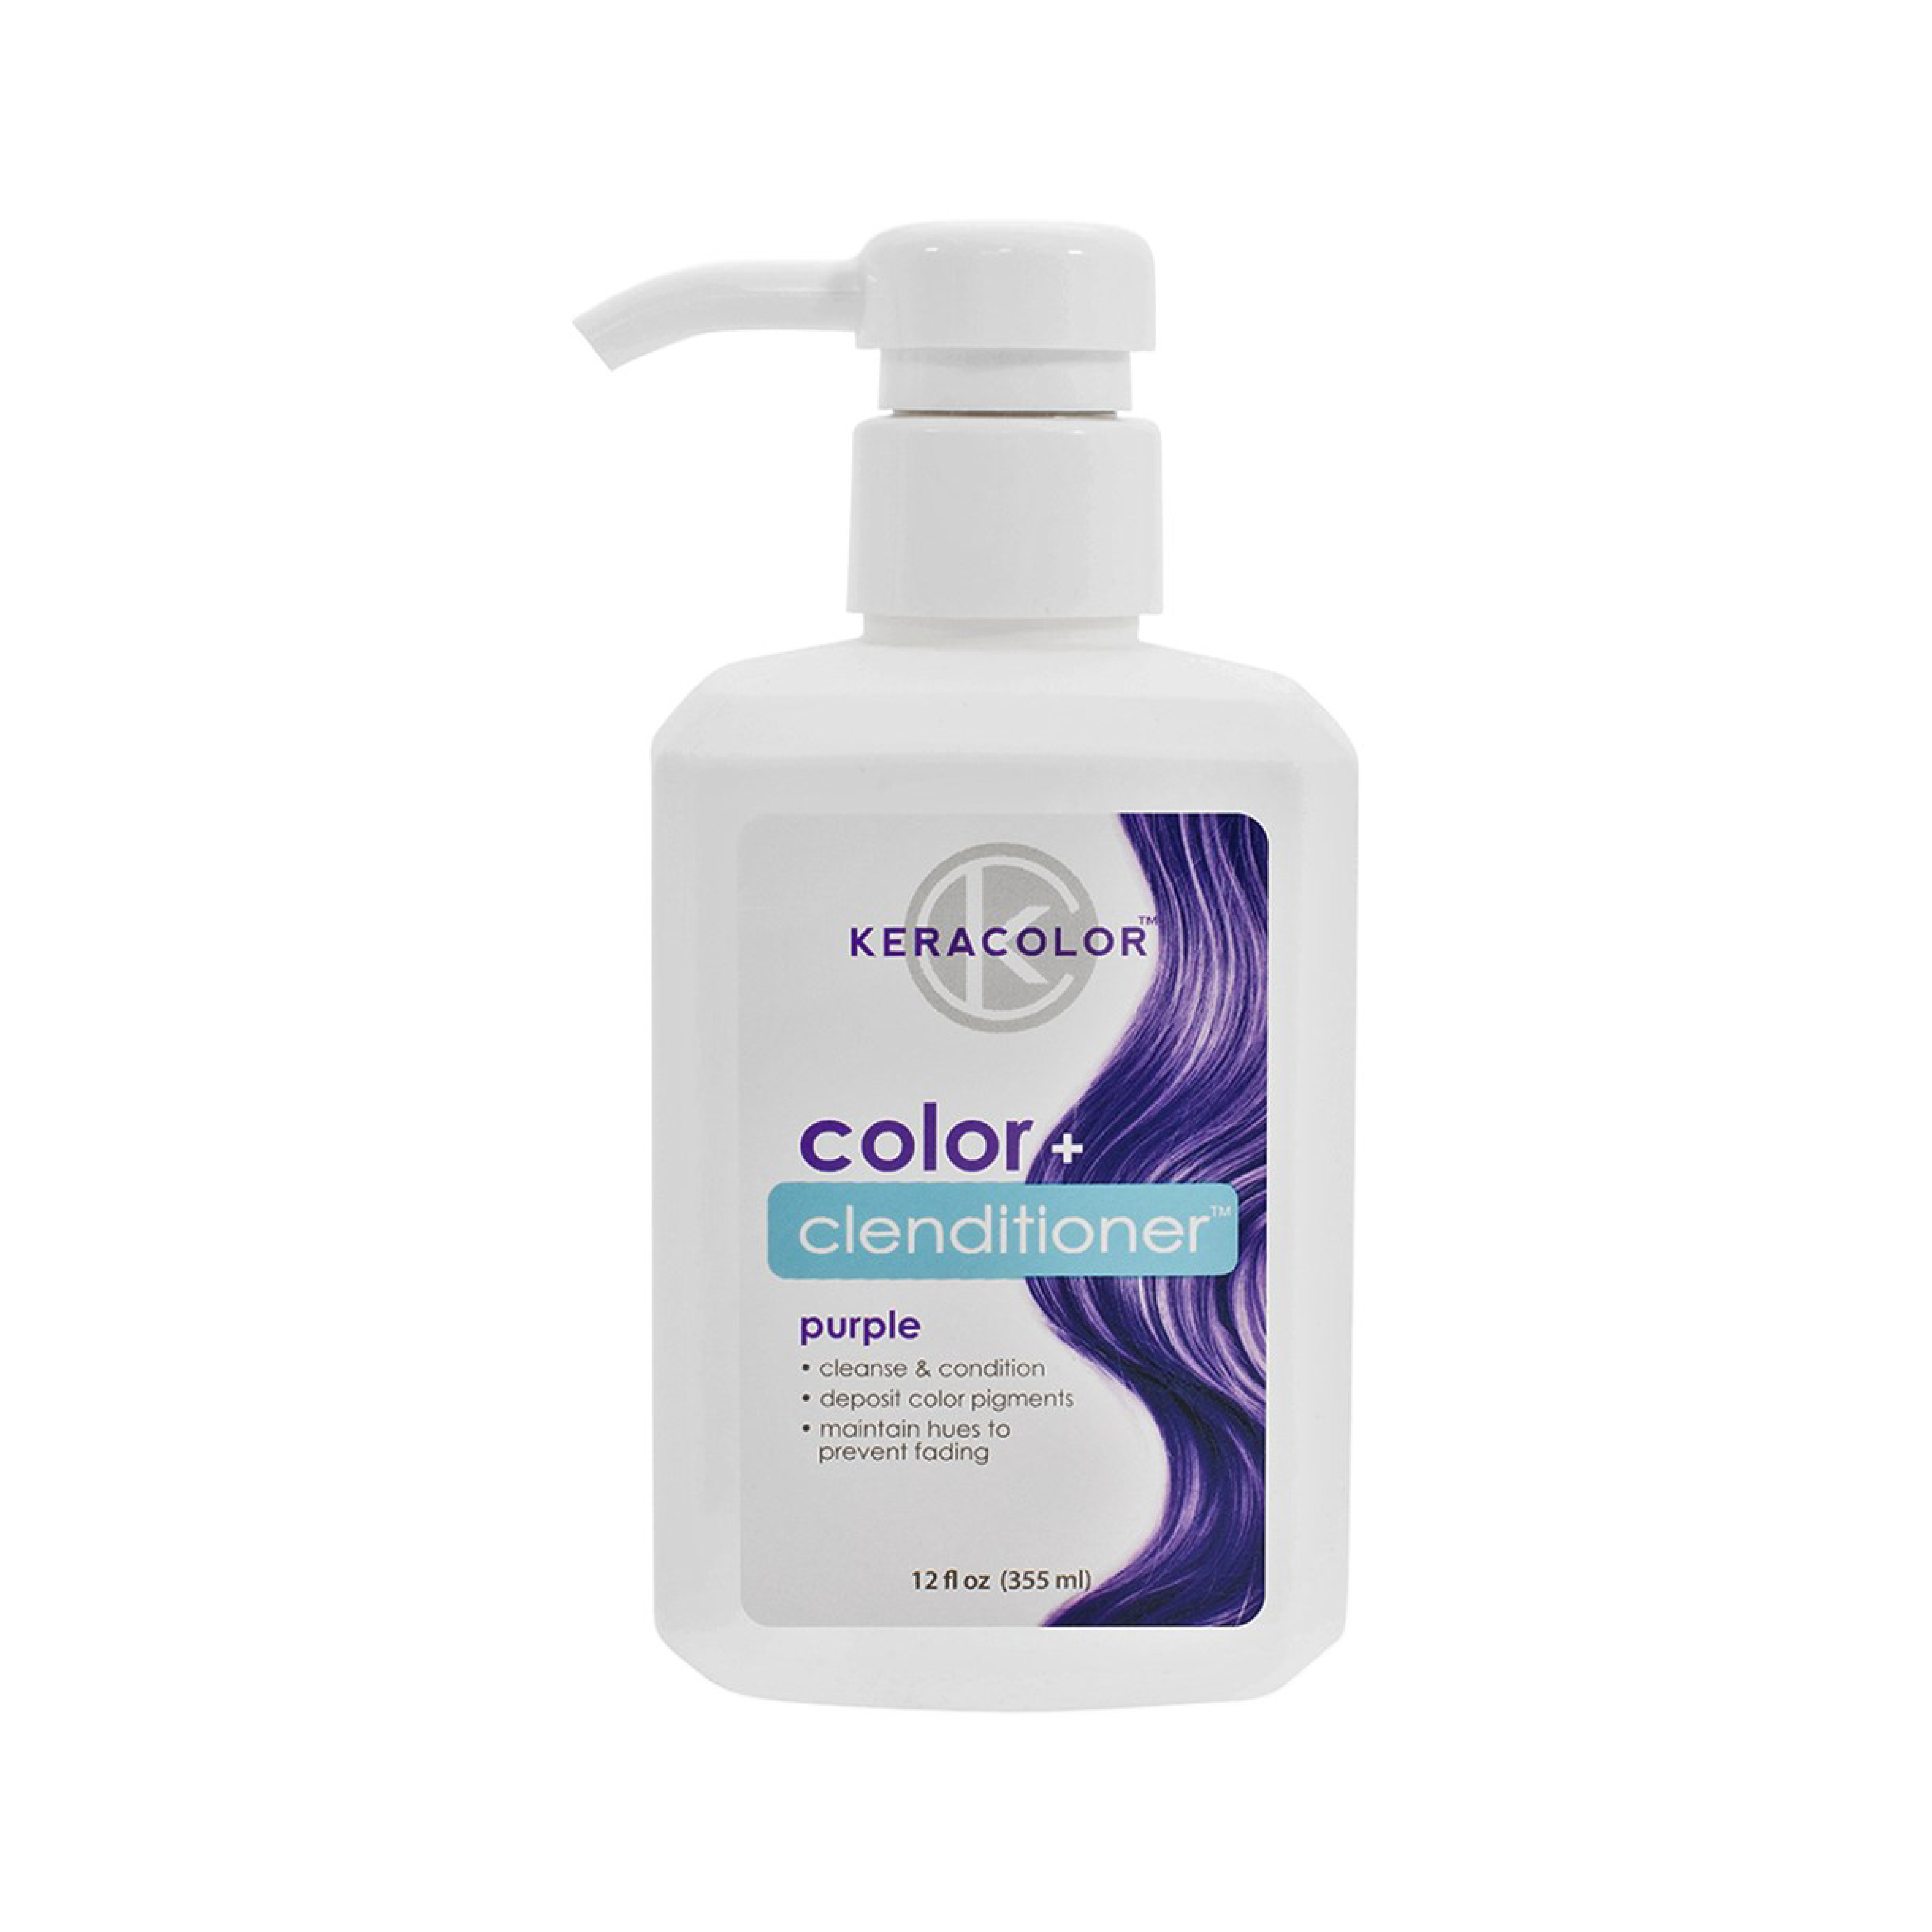 Keracolor Color Clenditioner Purple Colouring Shampoo - 355ml